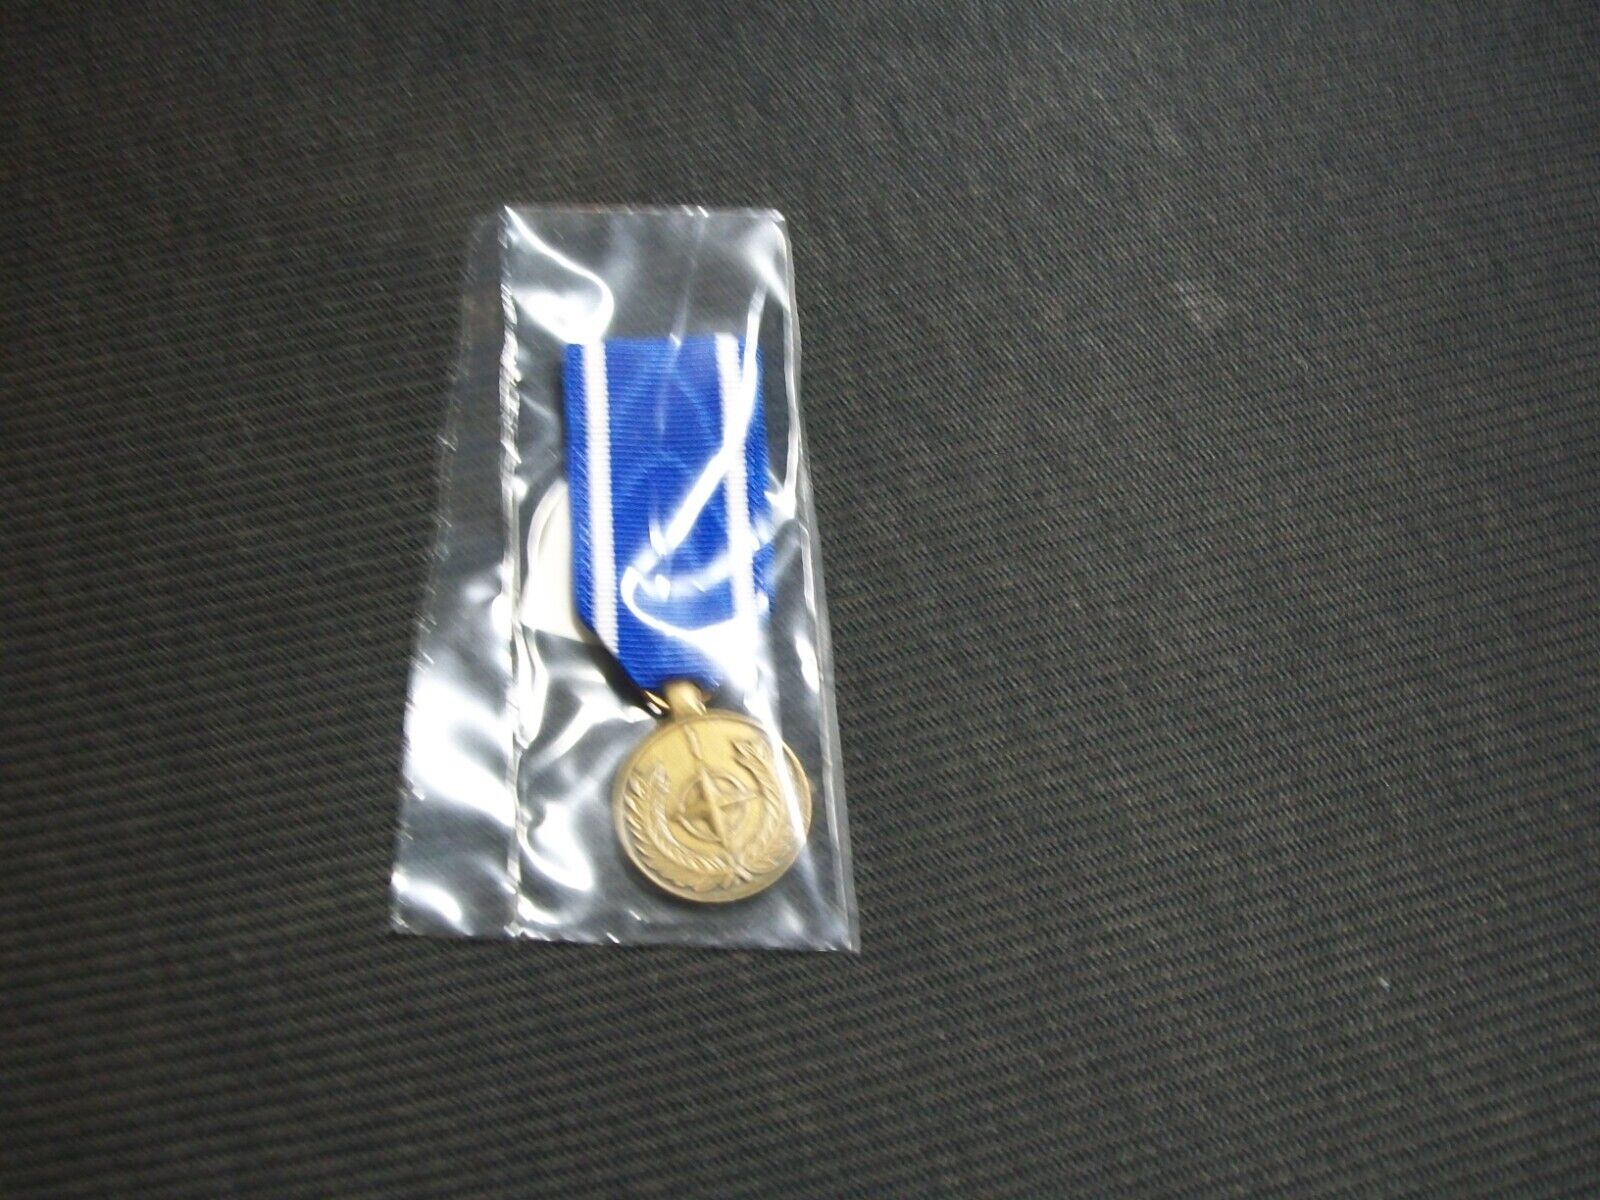 NATO Service mini miniature award medal